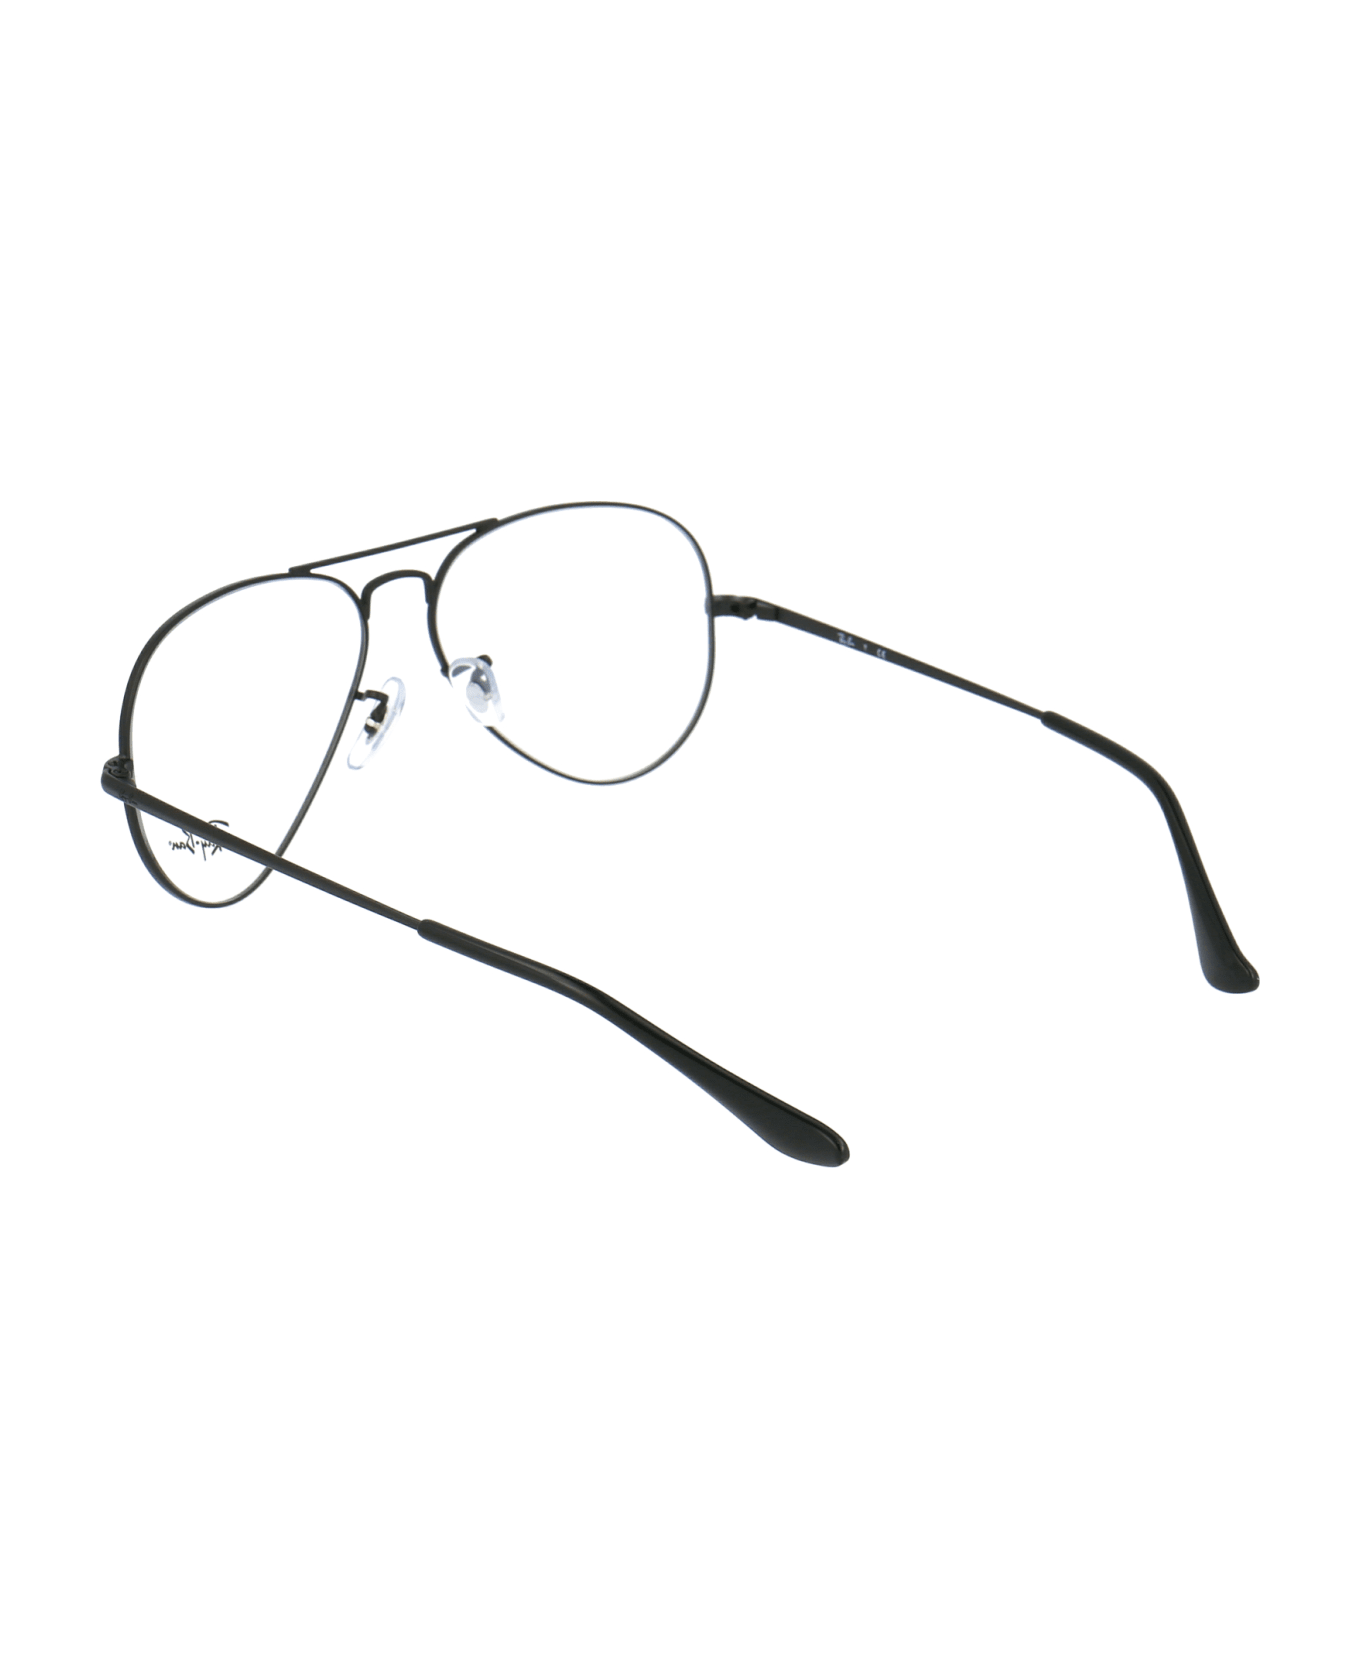 Ray-Ban Aviator Glasses - 2503 Black